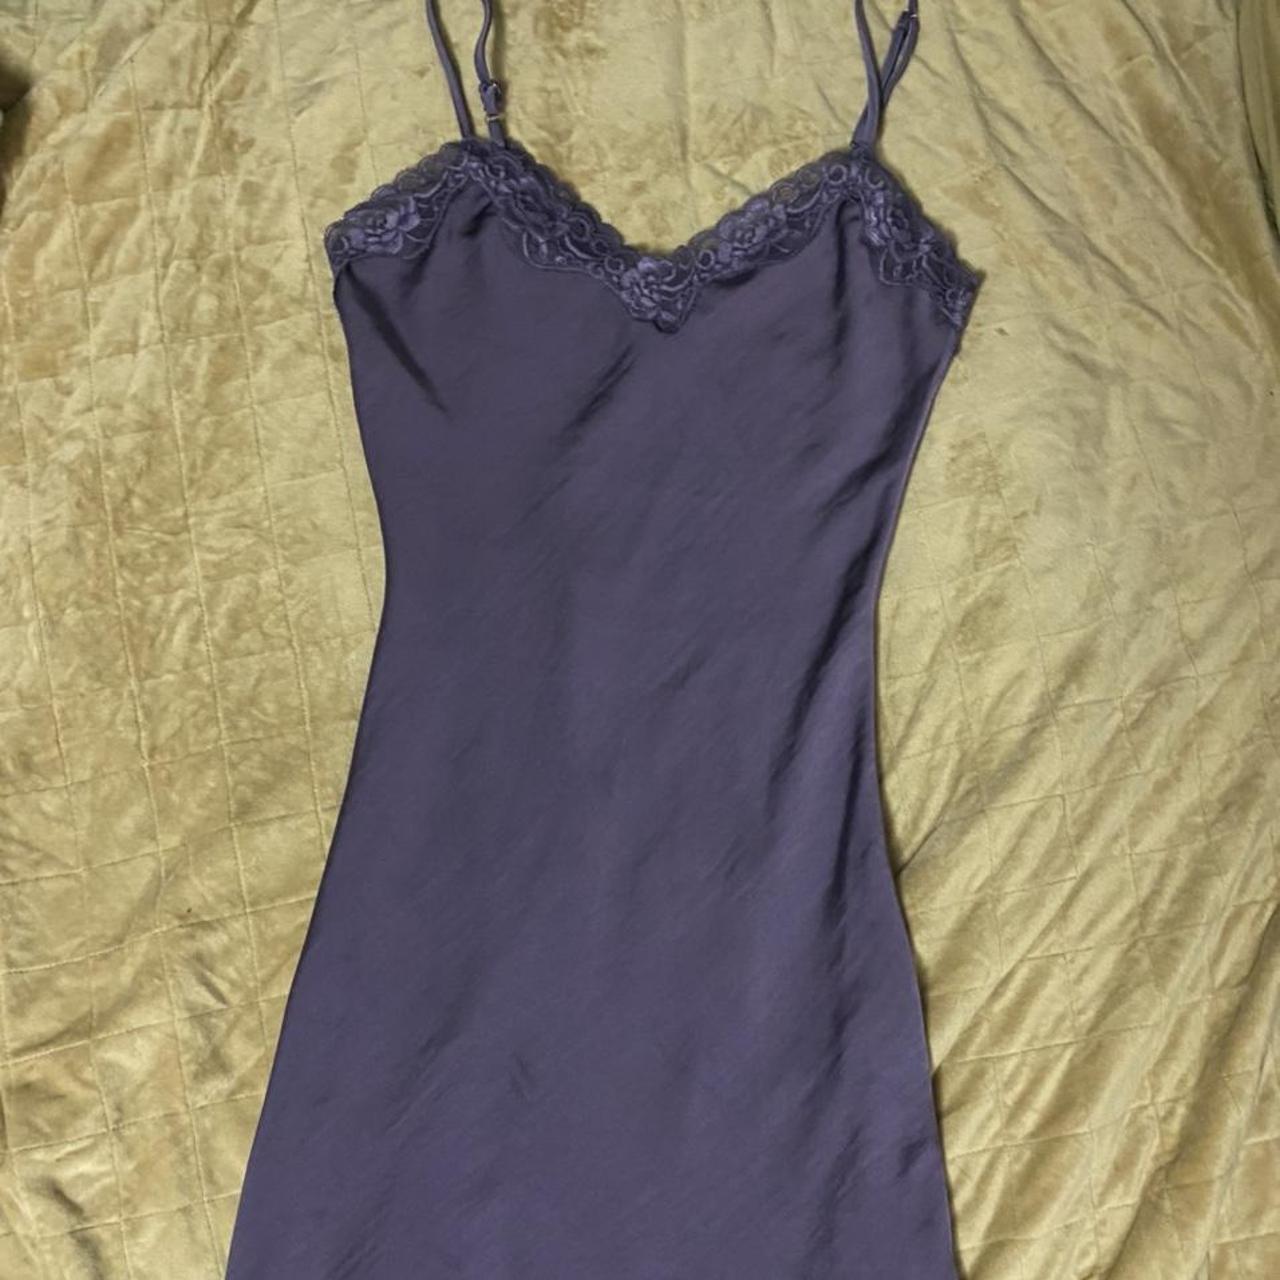 Women's Purple and Black Dress (2)